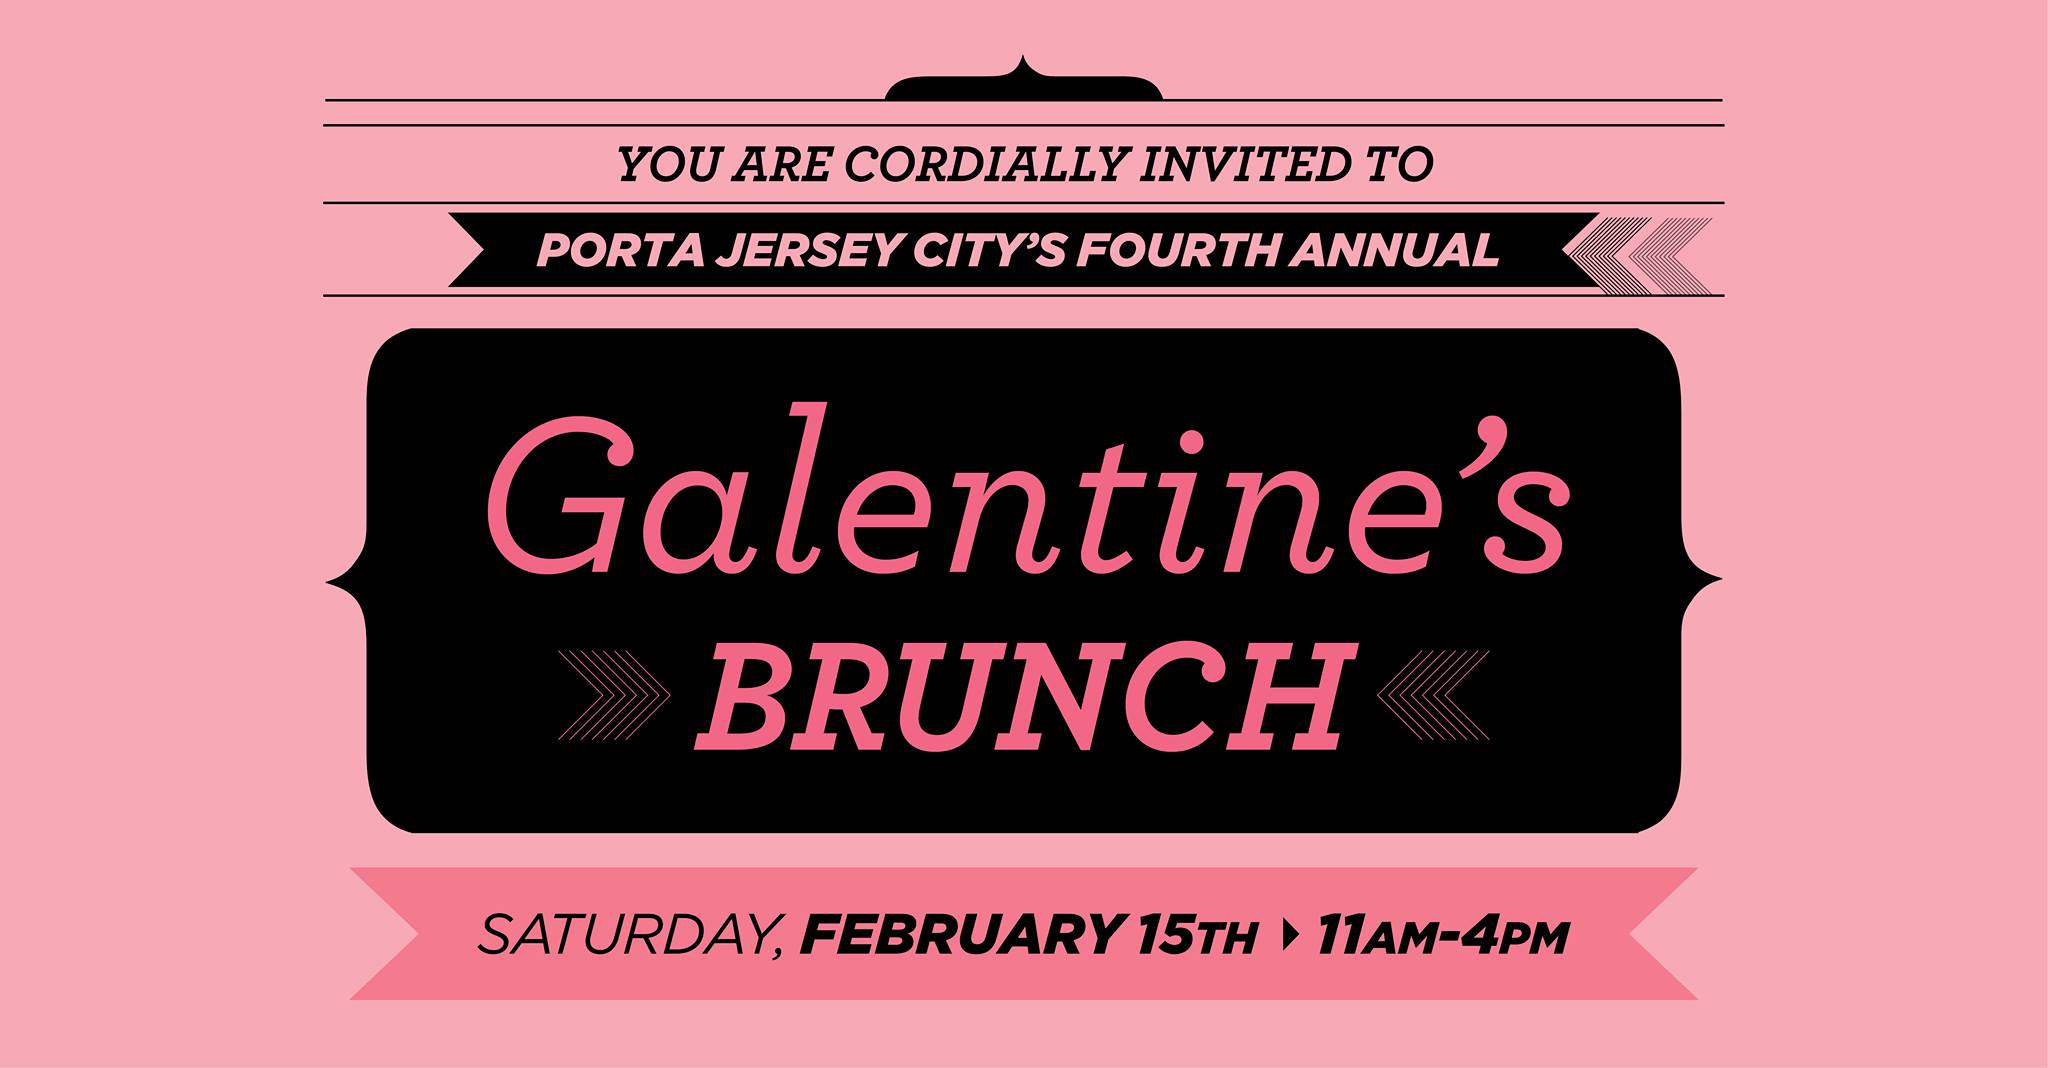 Flyer invitation to Porta Jersey City's Fourth Annual Galentine's Brunch; Saturday, February 15th 11am-4pm